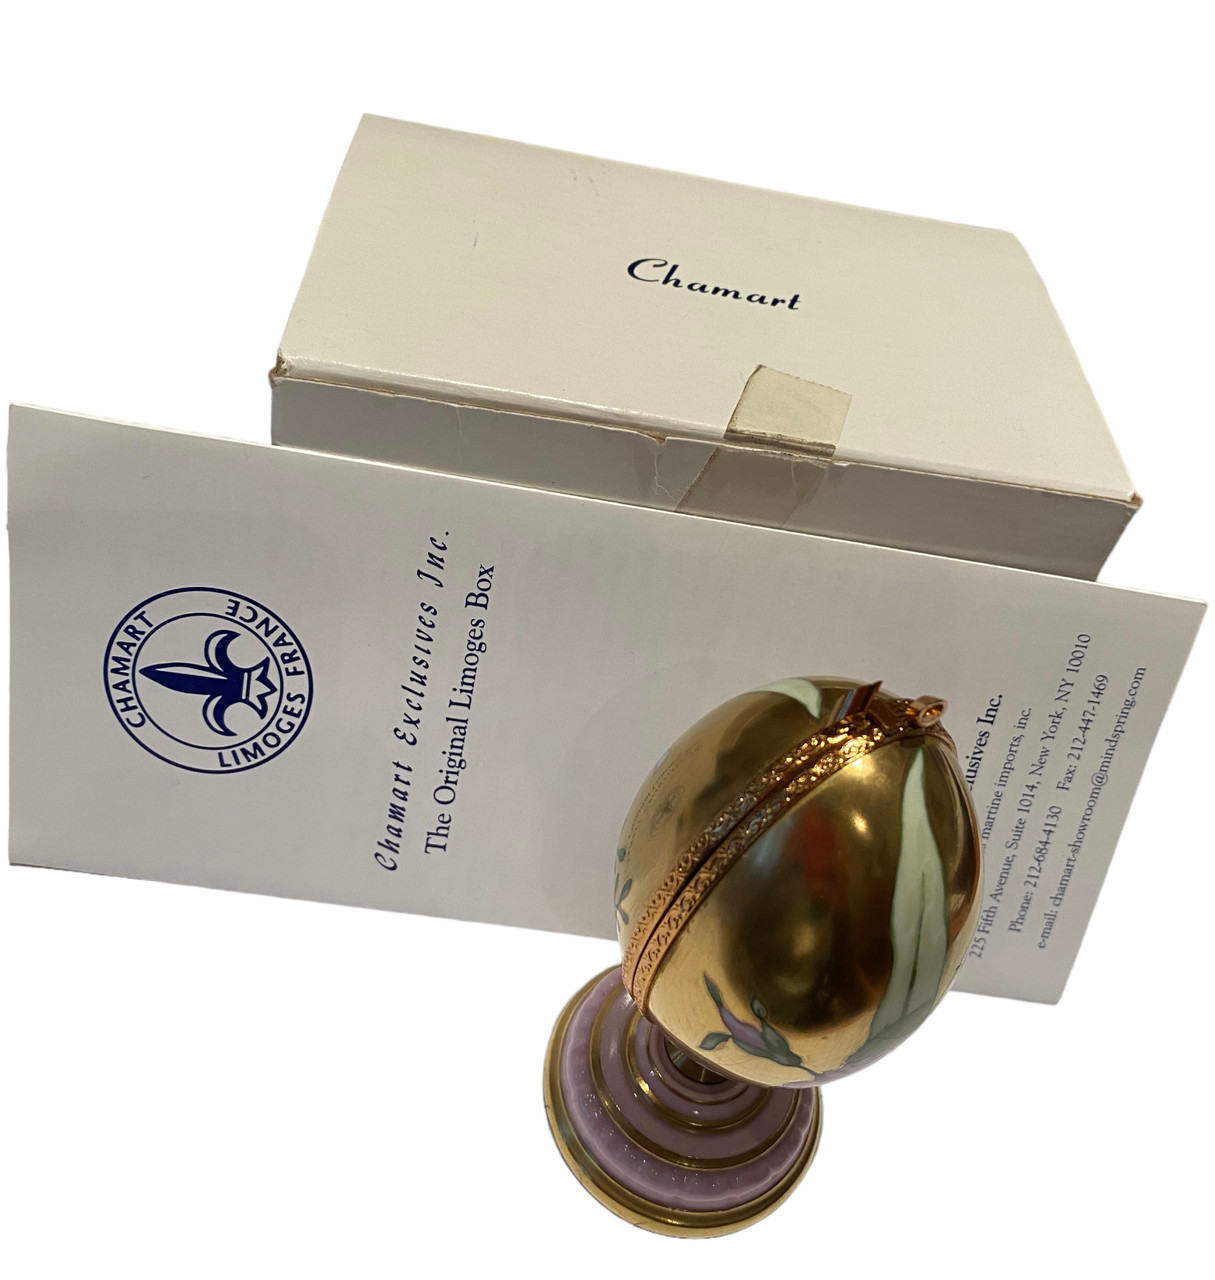 Chamart Large Limited Edition Floral Egg Limoges Box